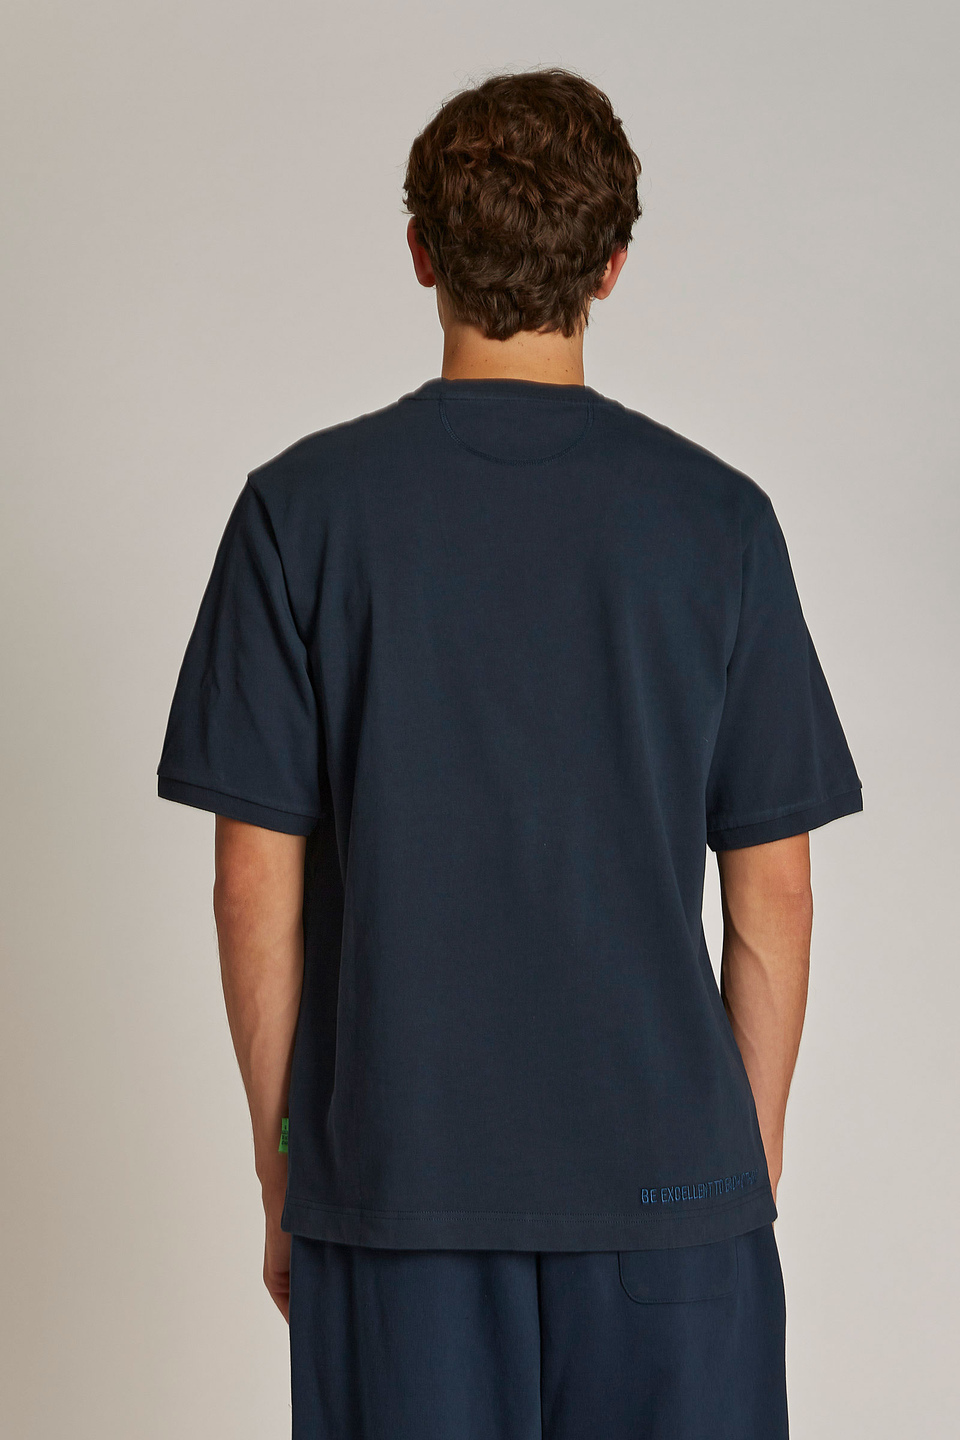 Herren-T-Shirt mit kurzem Arm aus Baumwolle, oversized Modell - La Martina - Official Online Shop